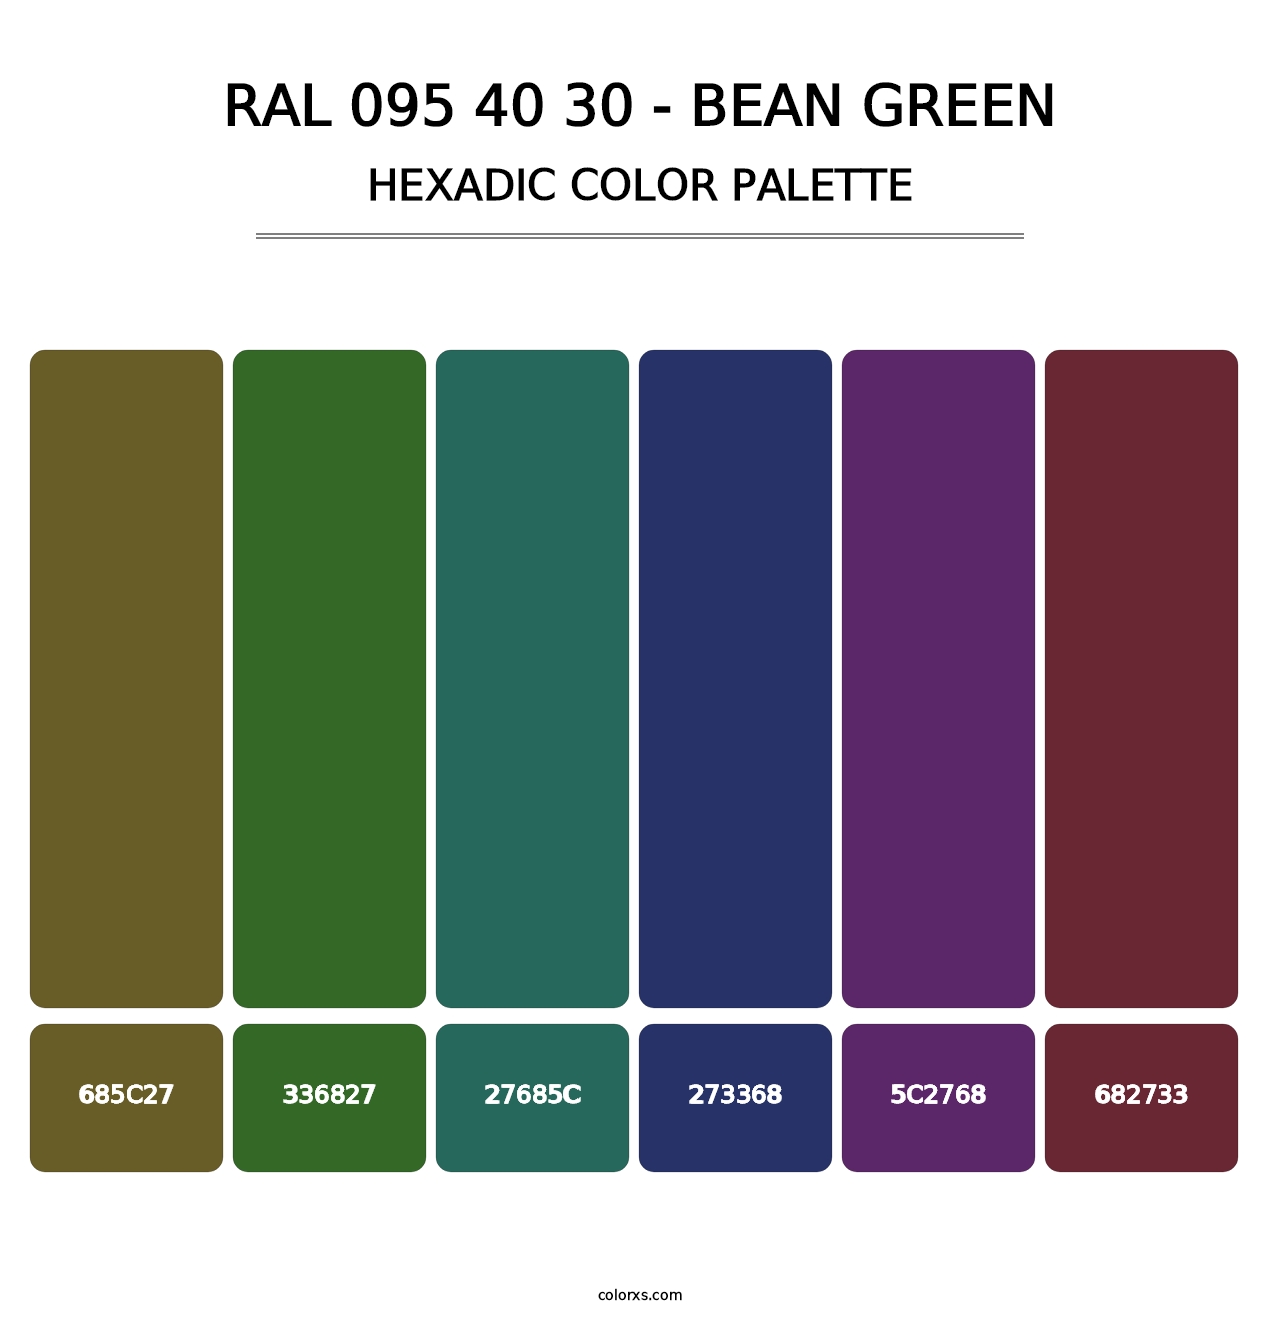 RAL 095 40 30 - Bean Green - Hexadic Color Palette